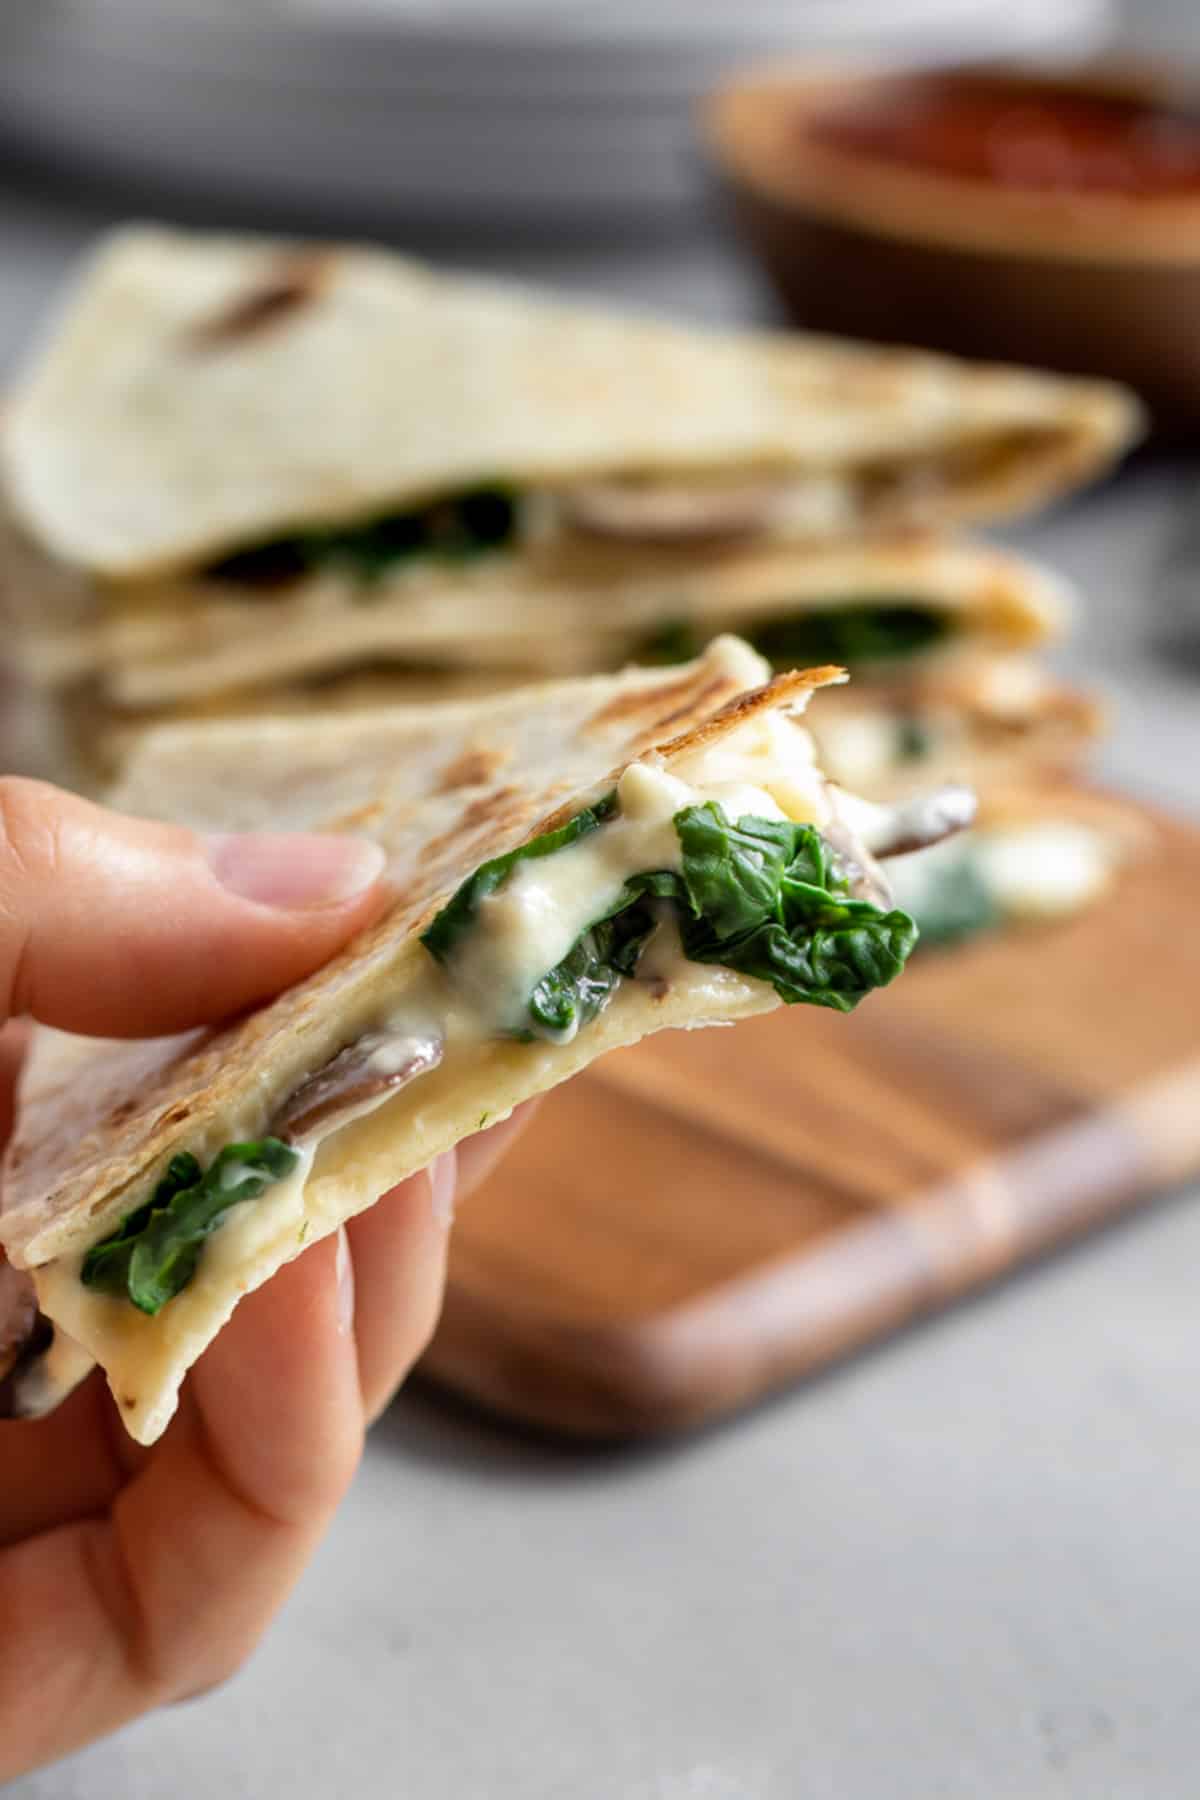 melted vegan mozzarella, spinach, and mushrooms inside warm quesadillas.